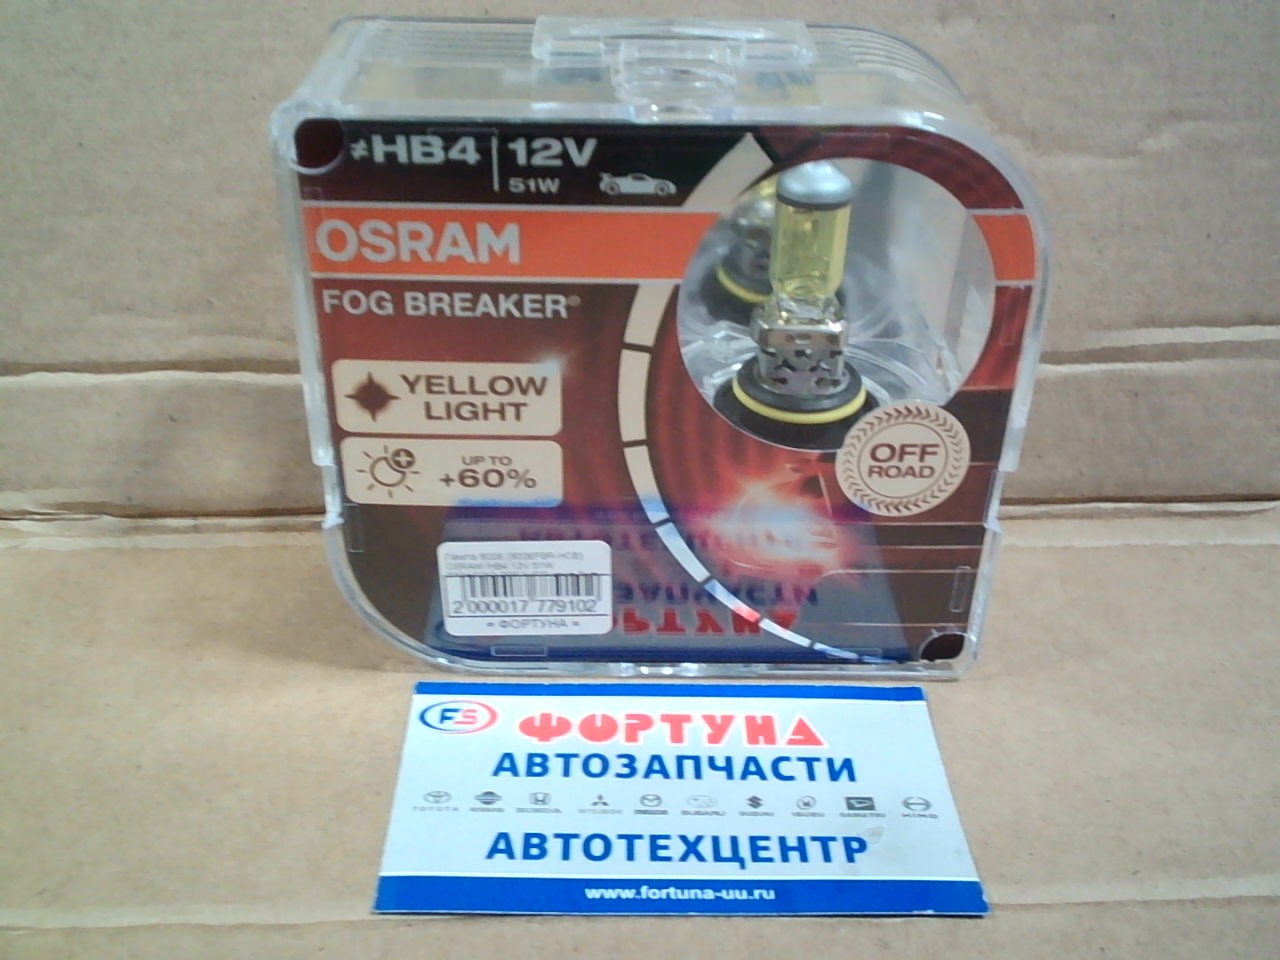 Лампа 9006 (9006FBR-HCB) OSRAM /HB4 12V 51W P22d/FOG-BREAKER комп.2шт. противотуманная, 2600К жёлтый свет +200%, освещённость +60%/ на  